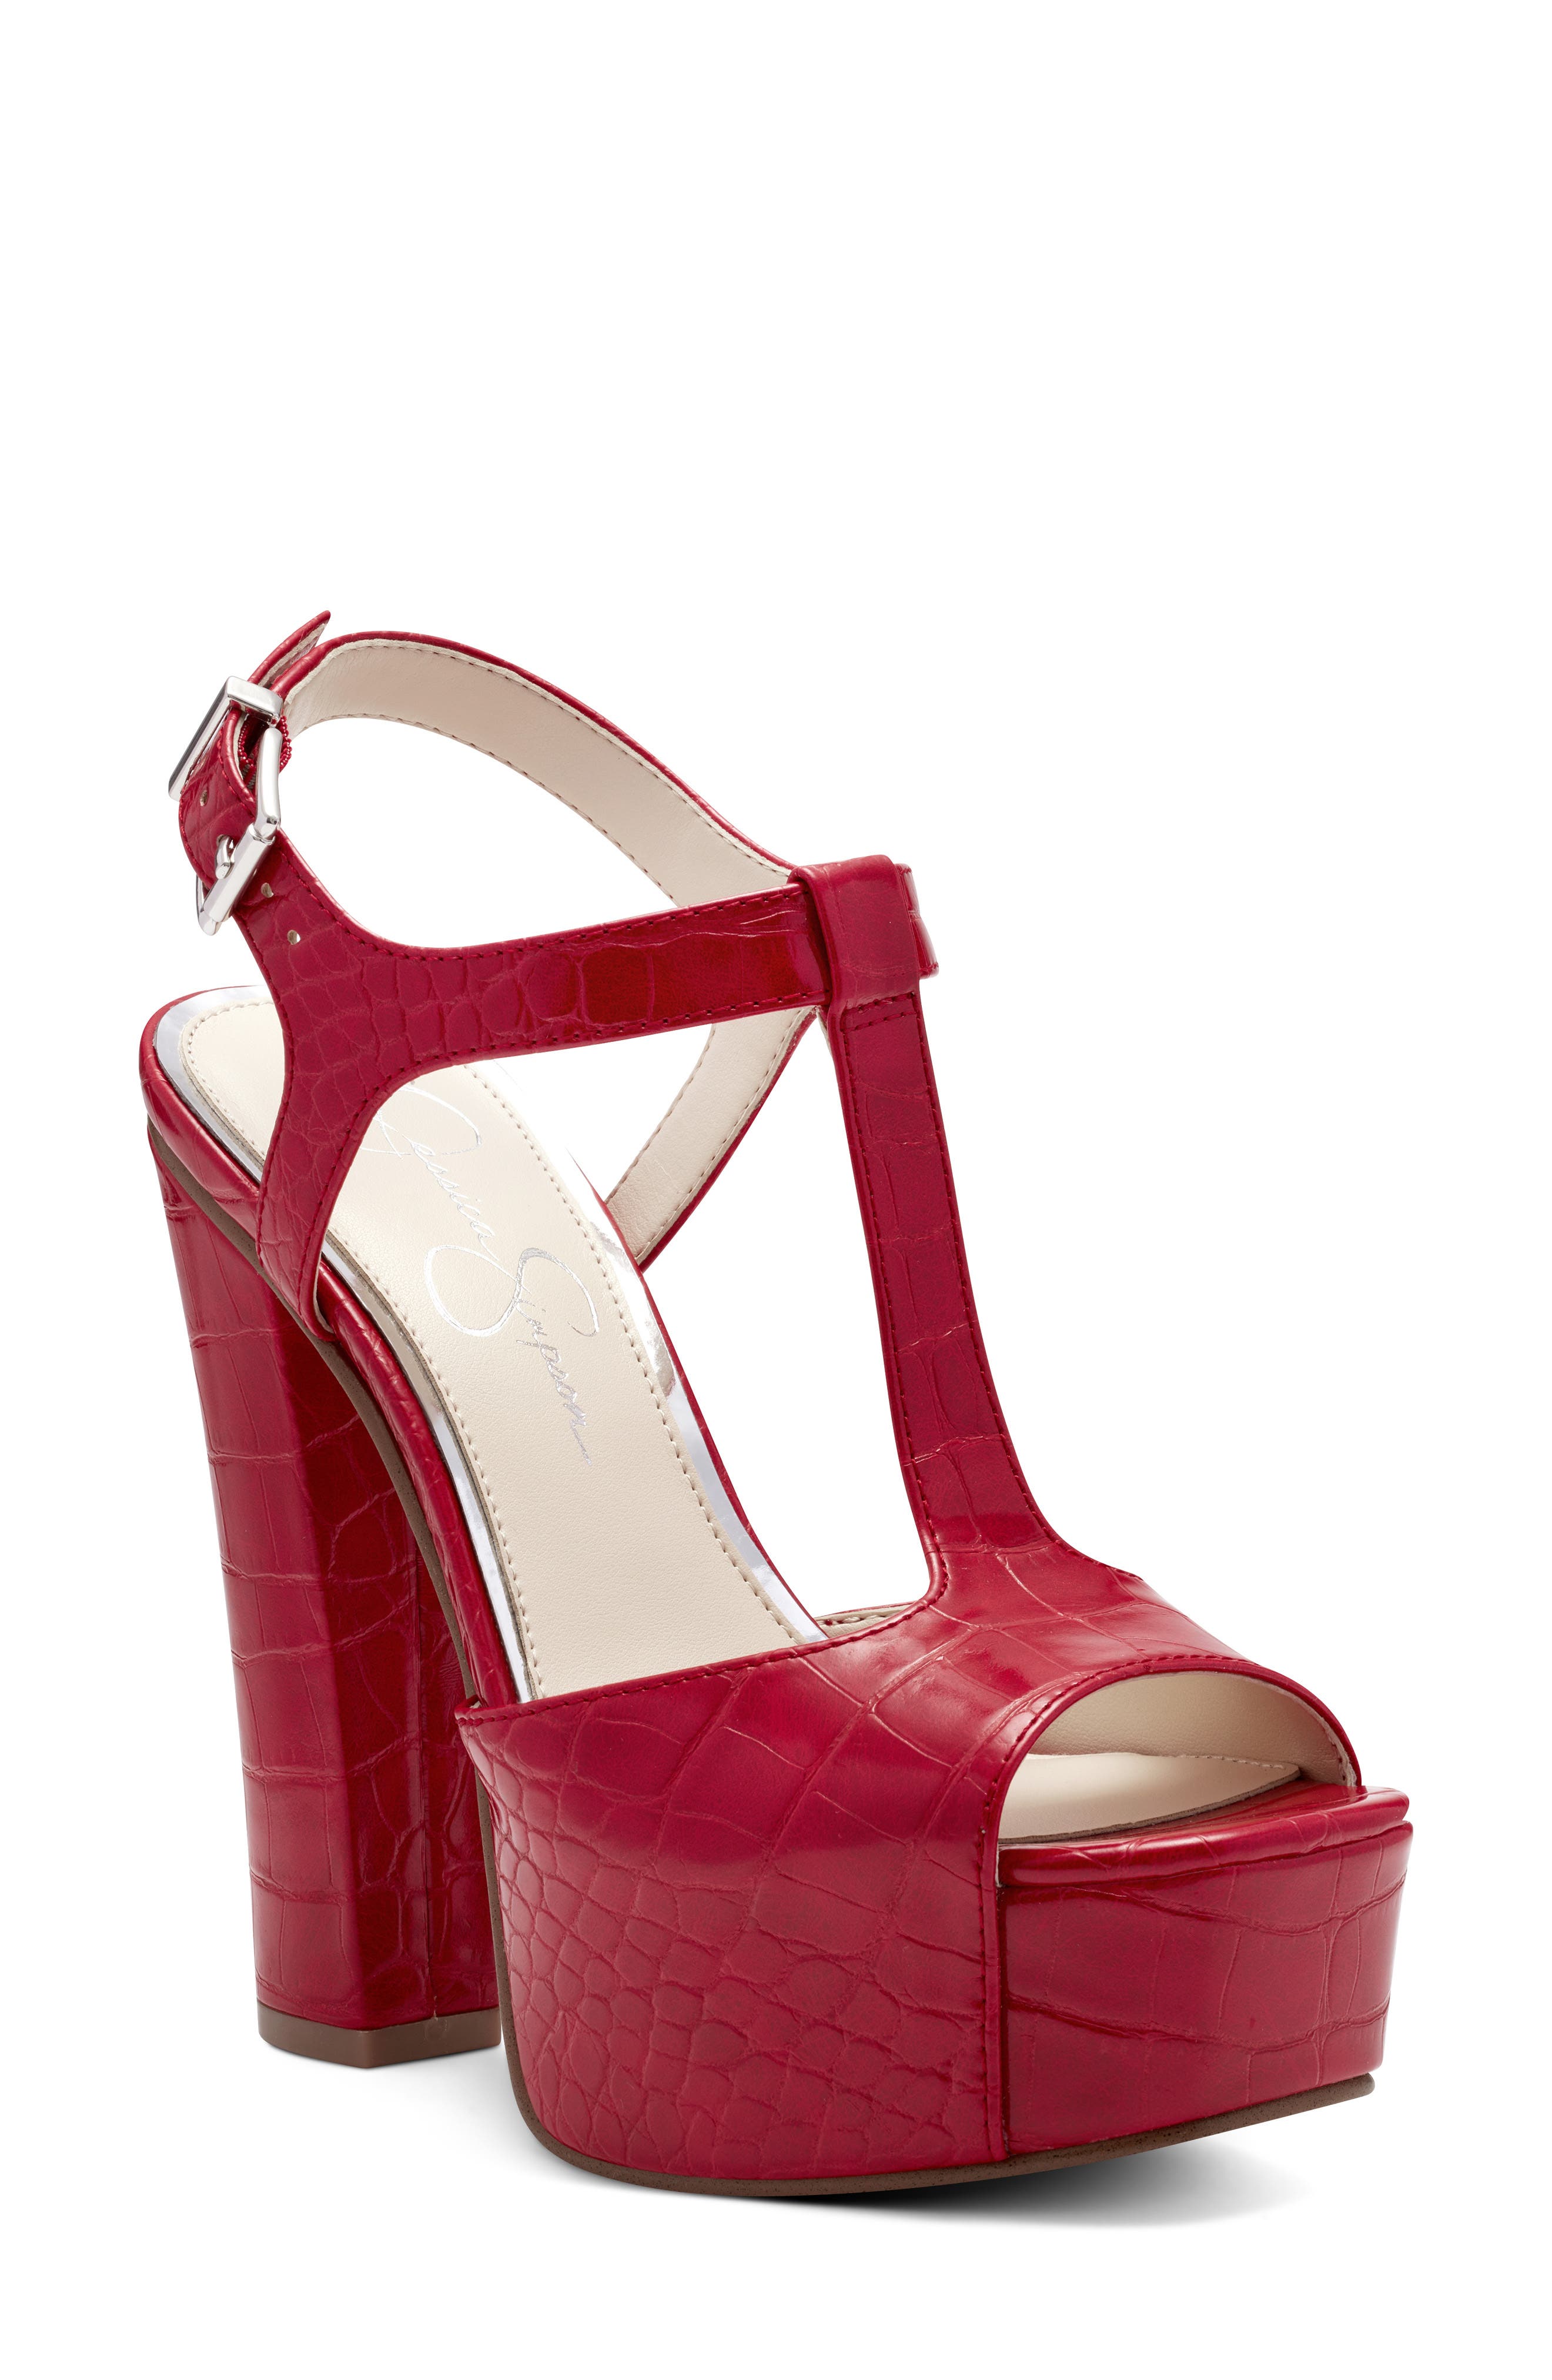 jessica simpson valentino shoes